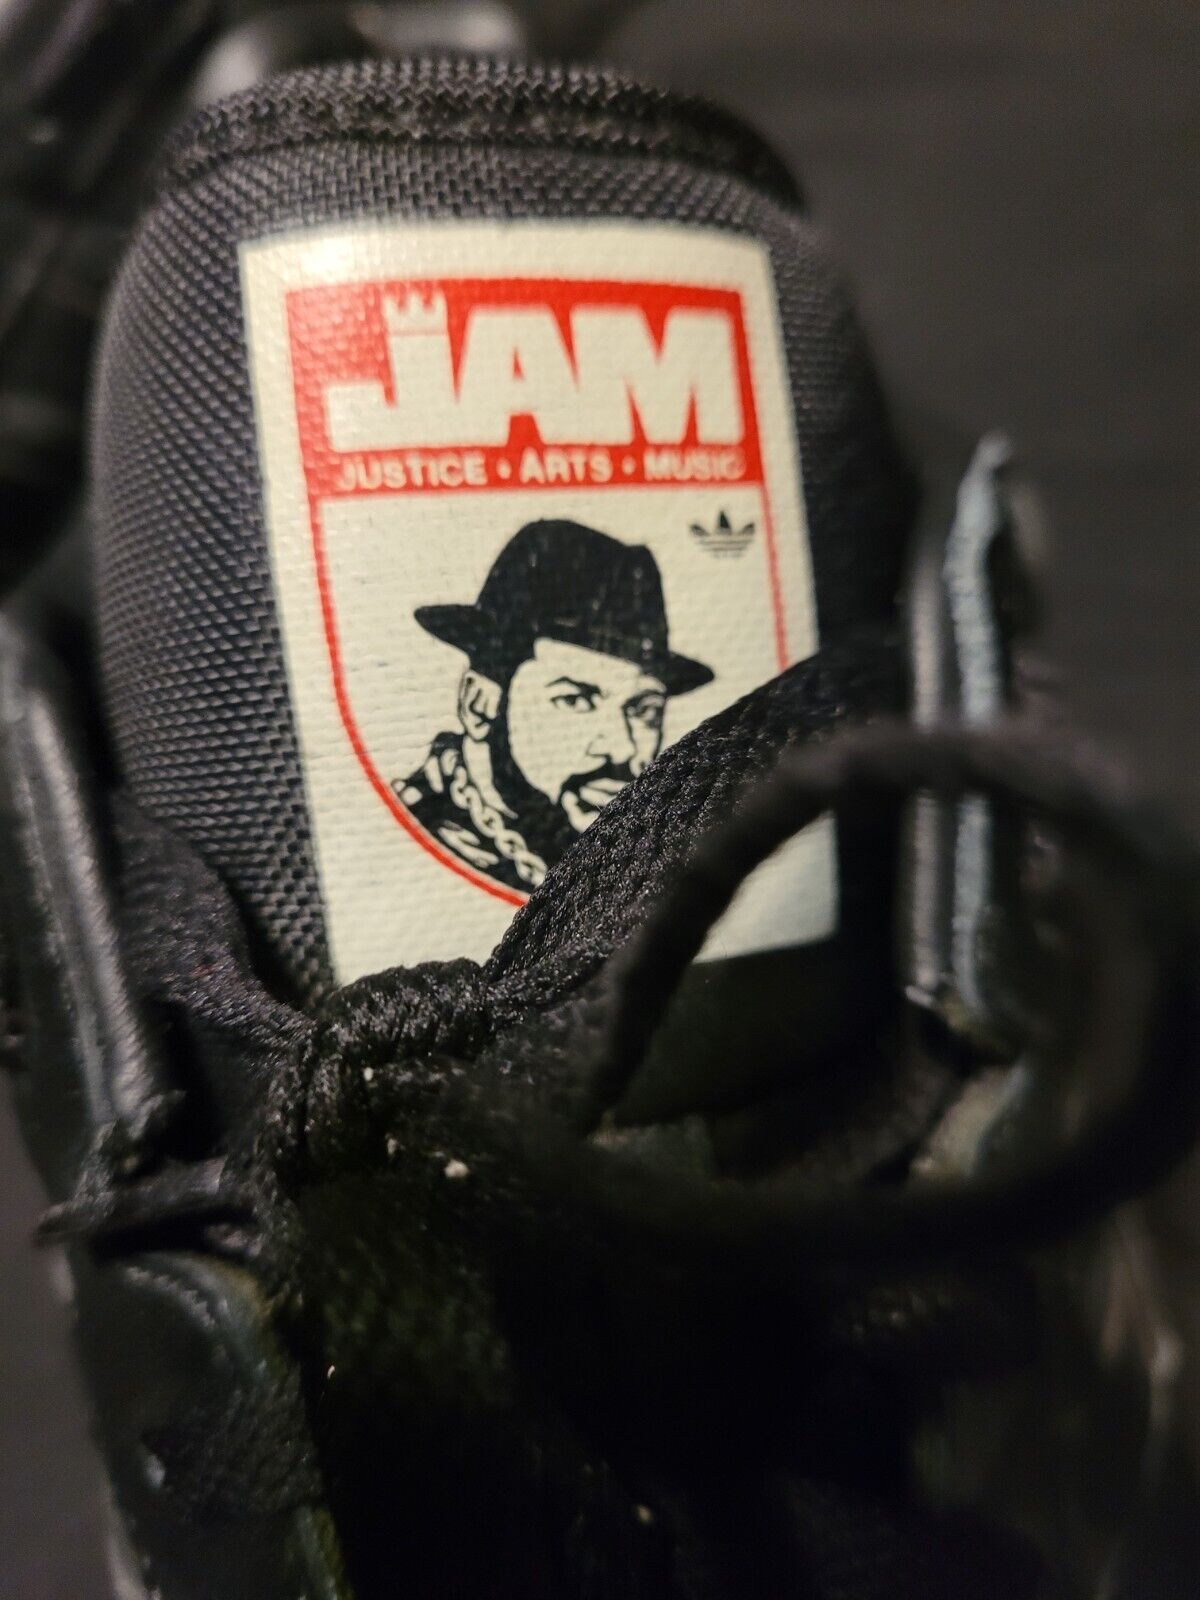 Adidas Superstar Jam Master Jay Limited Edition Run DMC size 13 